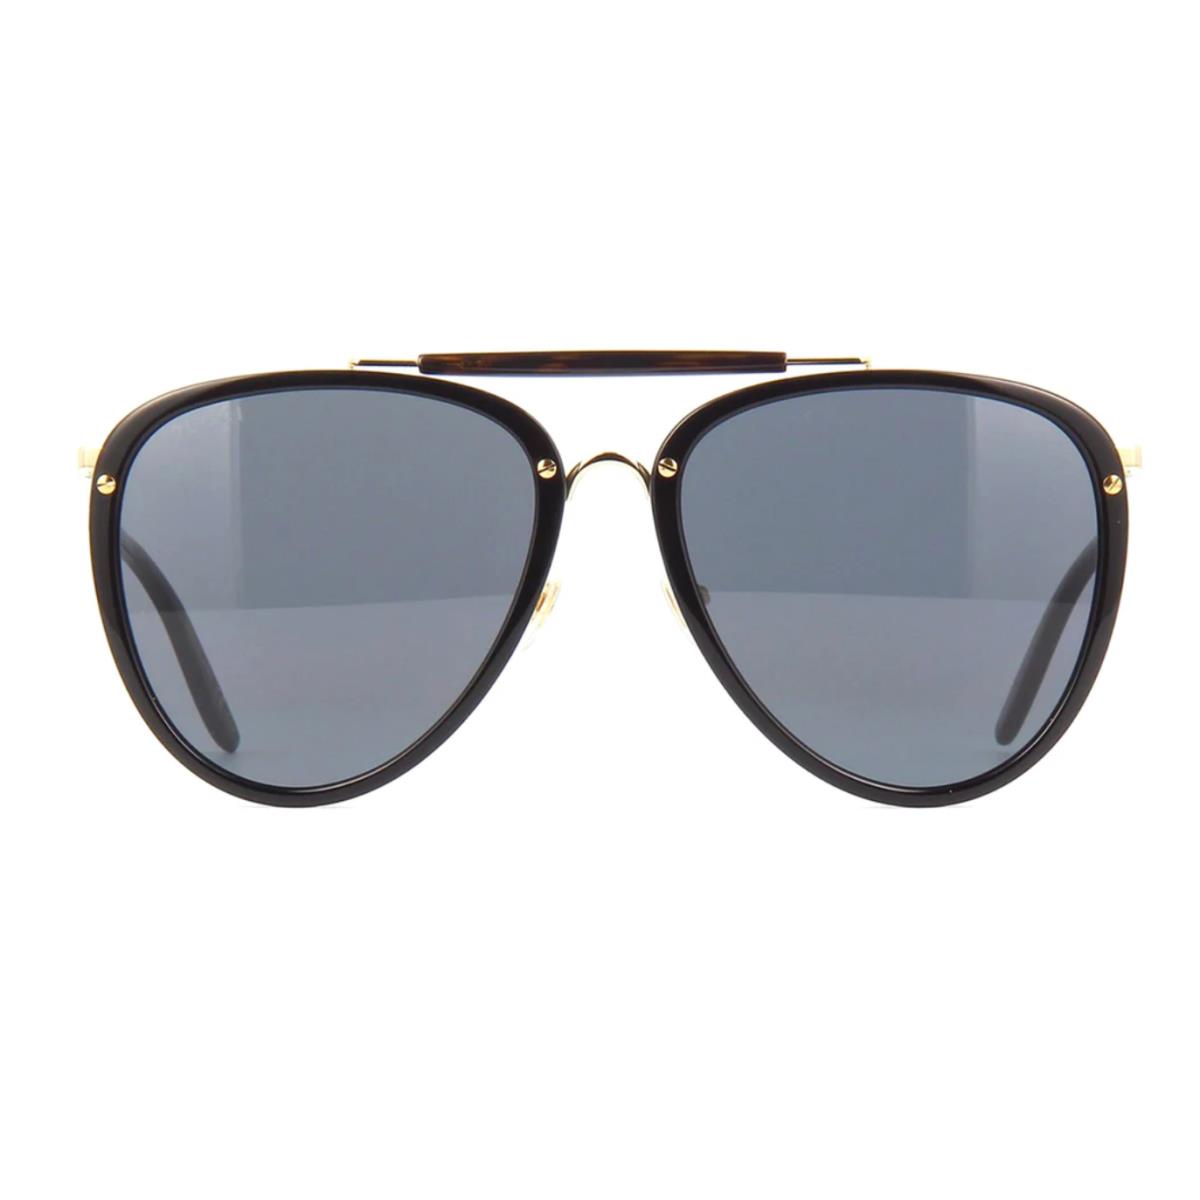 Gucci sunglasses  - Frame: Black, Lens: Gray 0